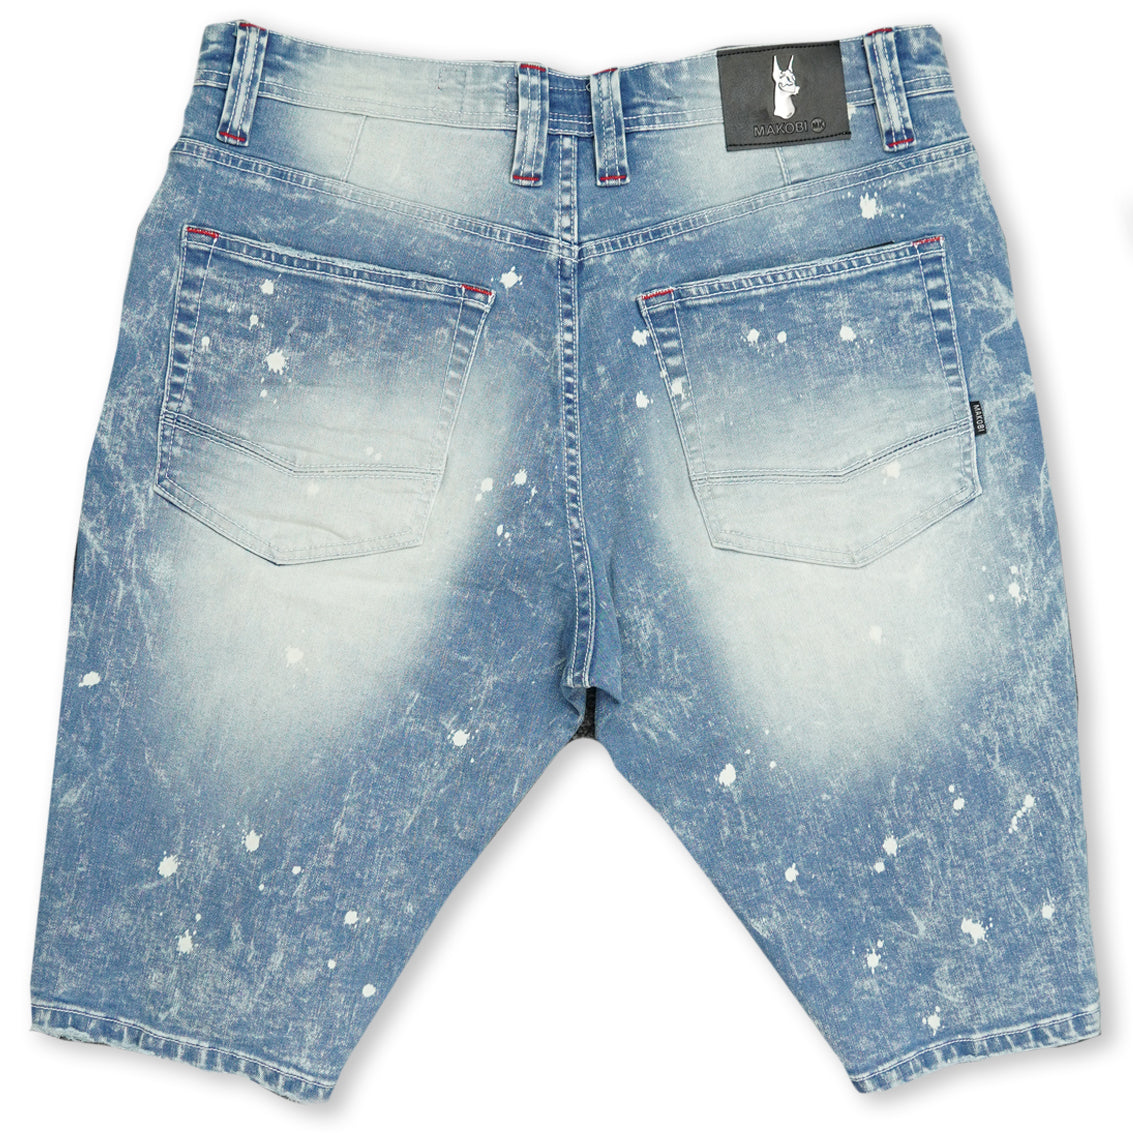 M771 Pacifica Shredded Shorts - Light Wash